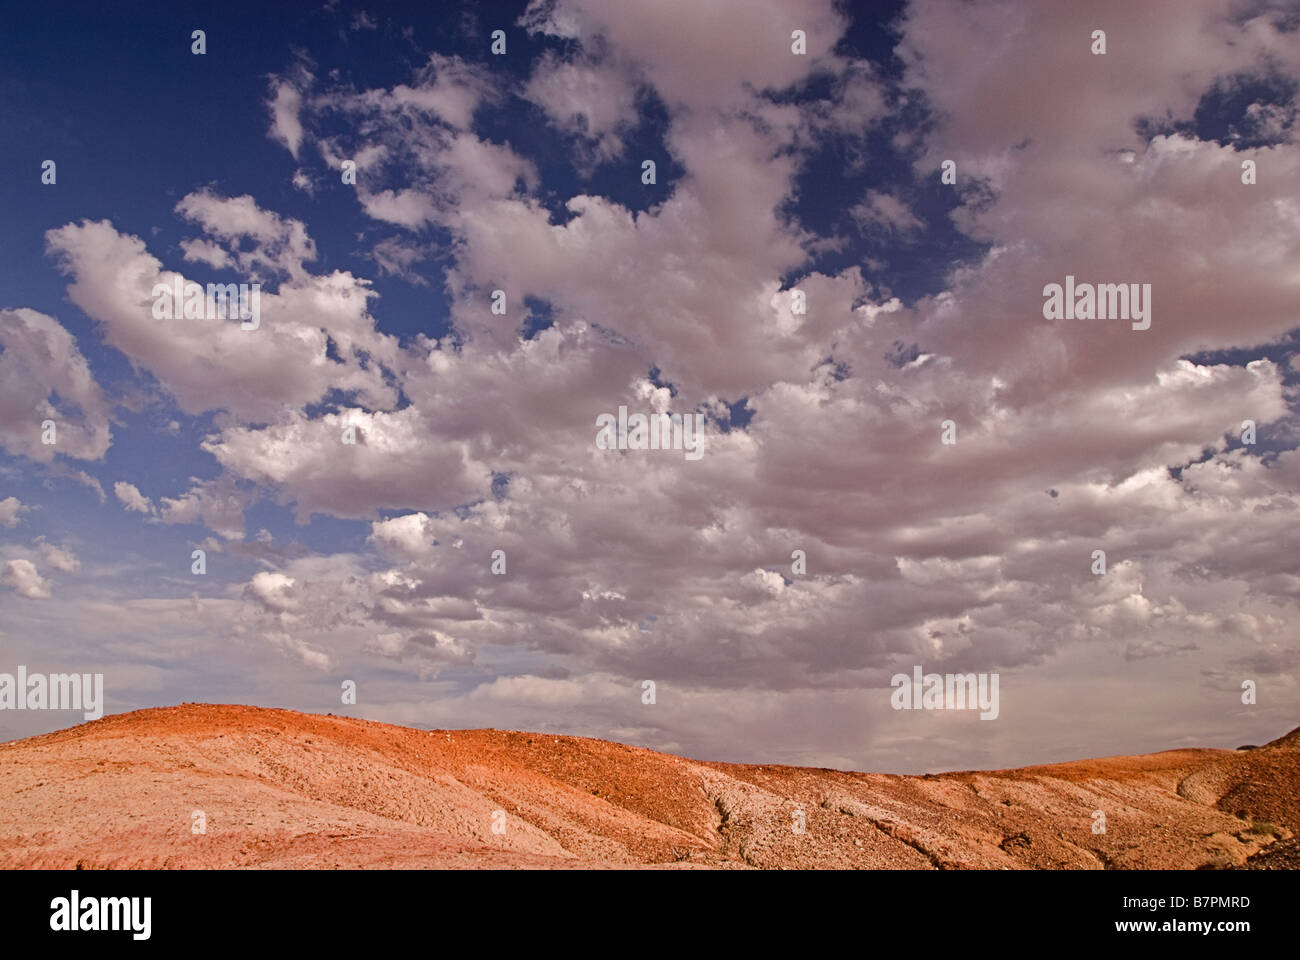 Landscape of the Bayangovi area, Gobi desert, Mongolia. Stock Photo